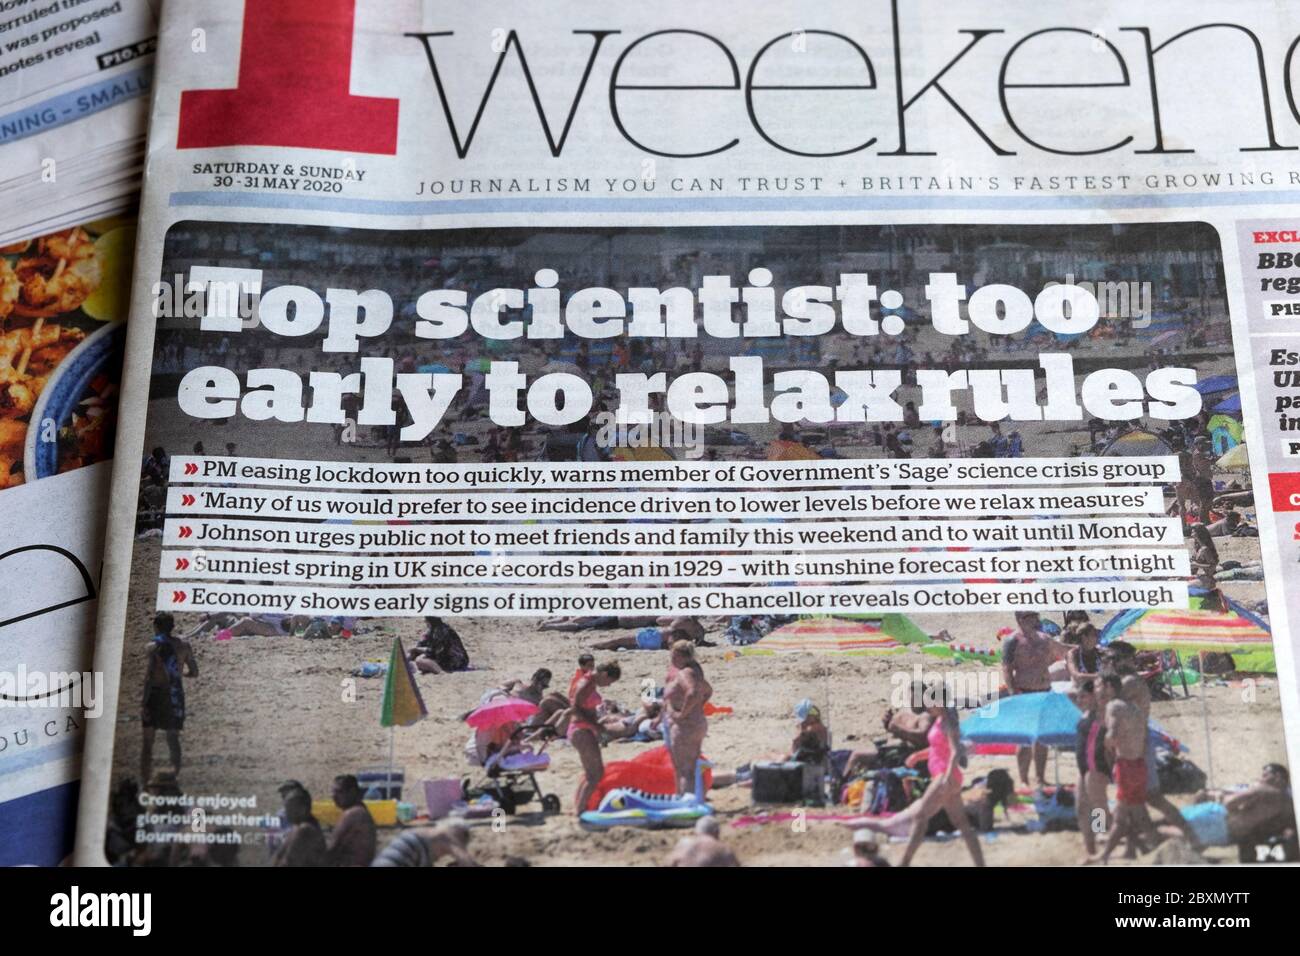 'Top Scientist: Too early to relax rules' Covid 19 Coronavirus corona pandemic on i giornale prima pagina titolo 30 - 31 maggio 2020 Londra Inghilterra UK Foto Stock